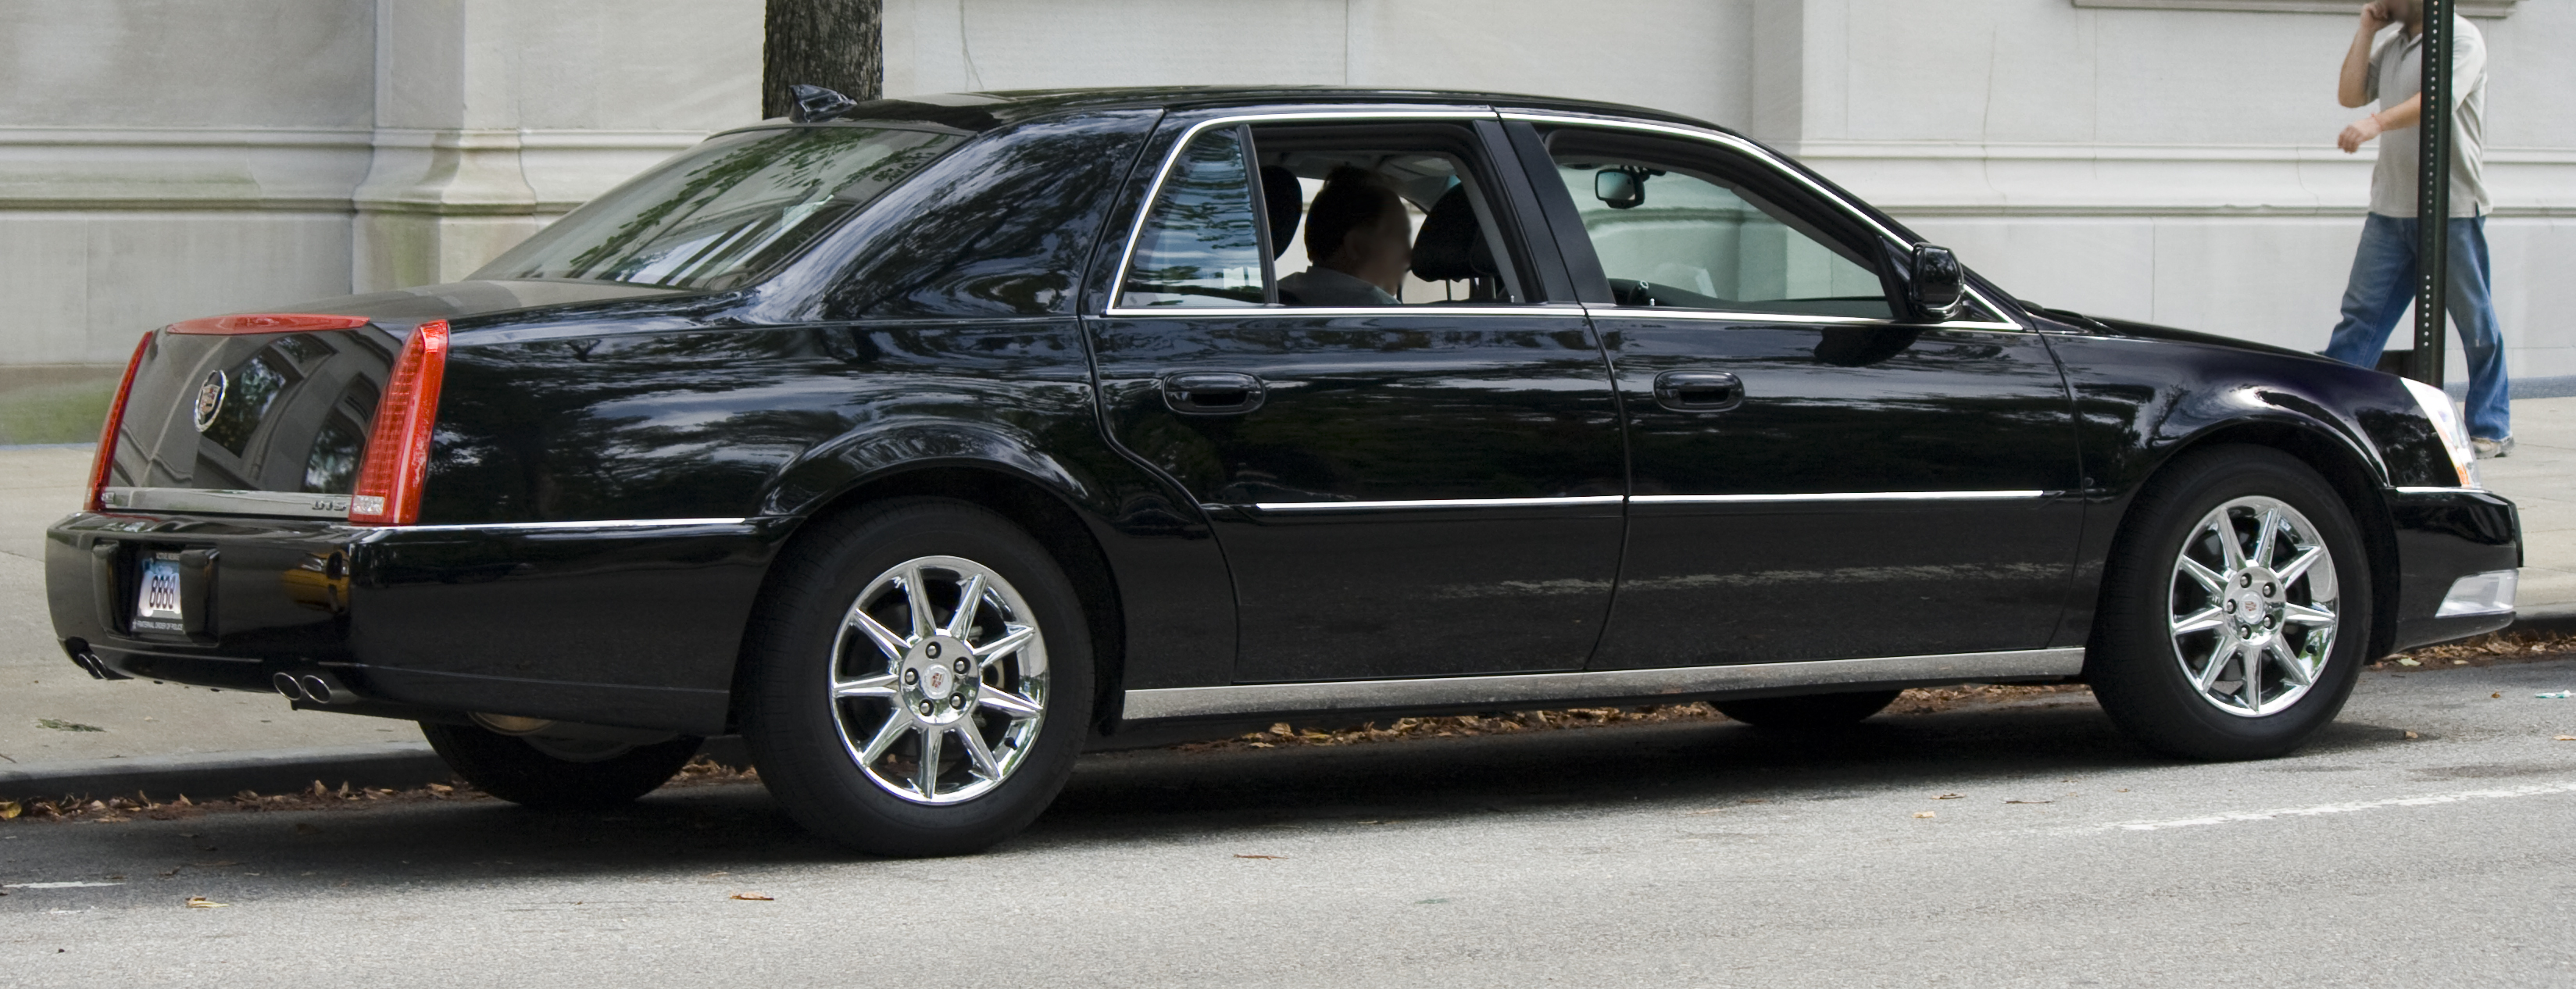 File:Cadillac DTS-L 2007.jpg - Wikimedia Commons